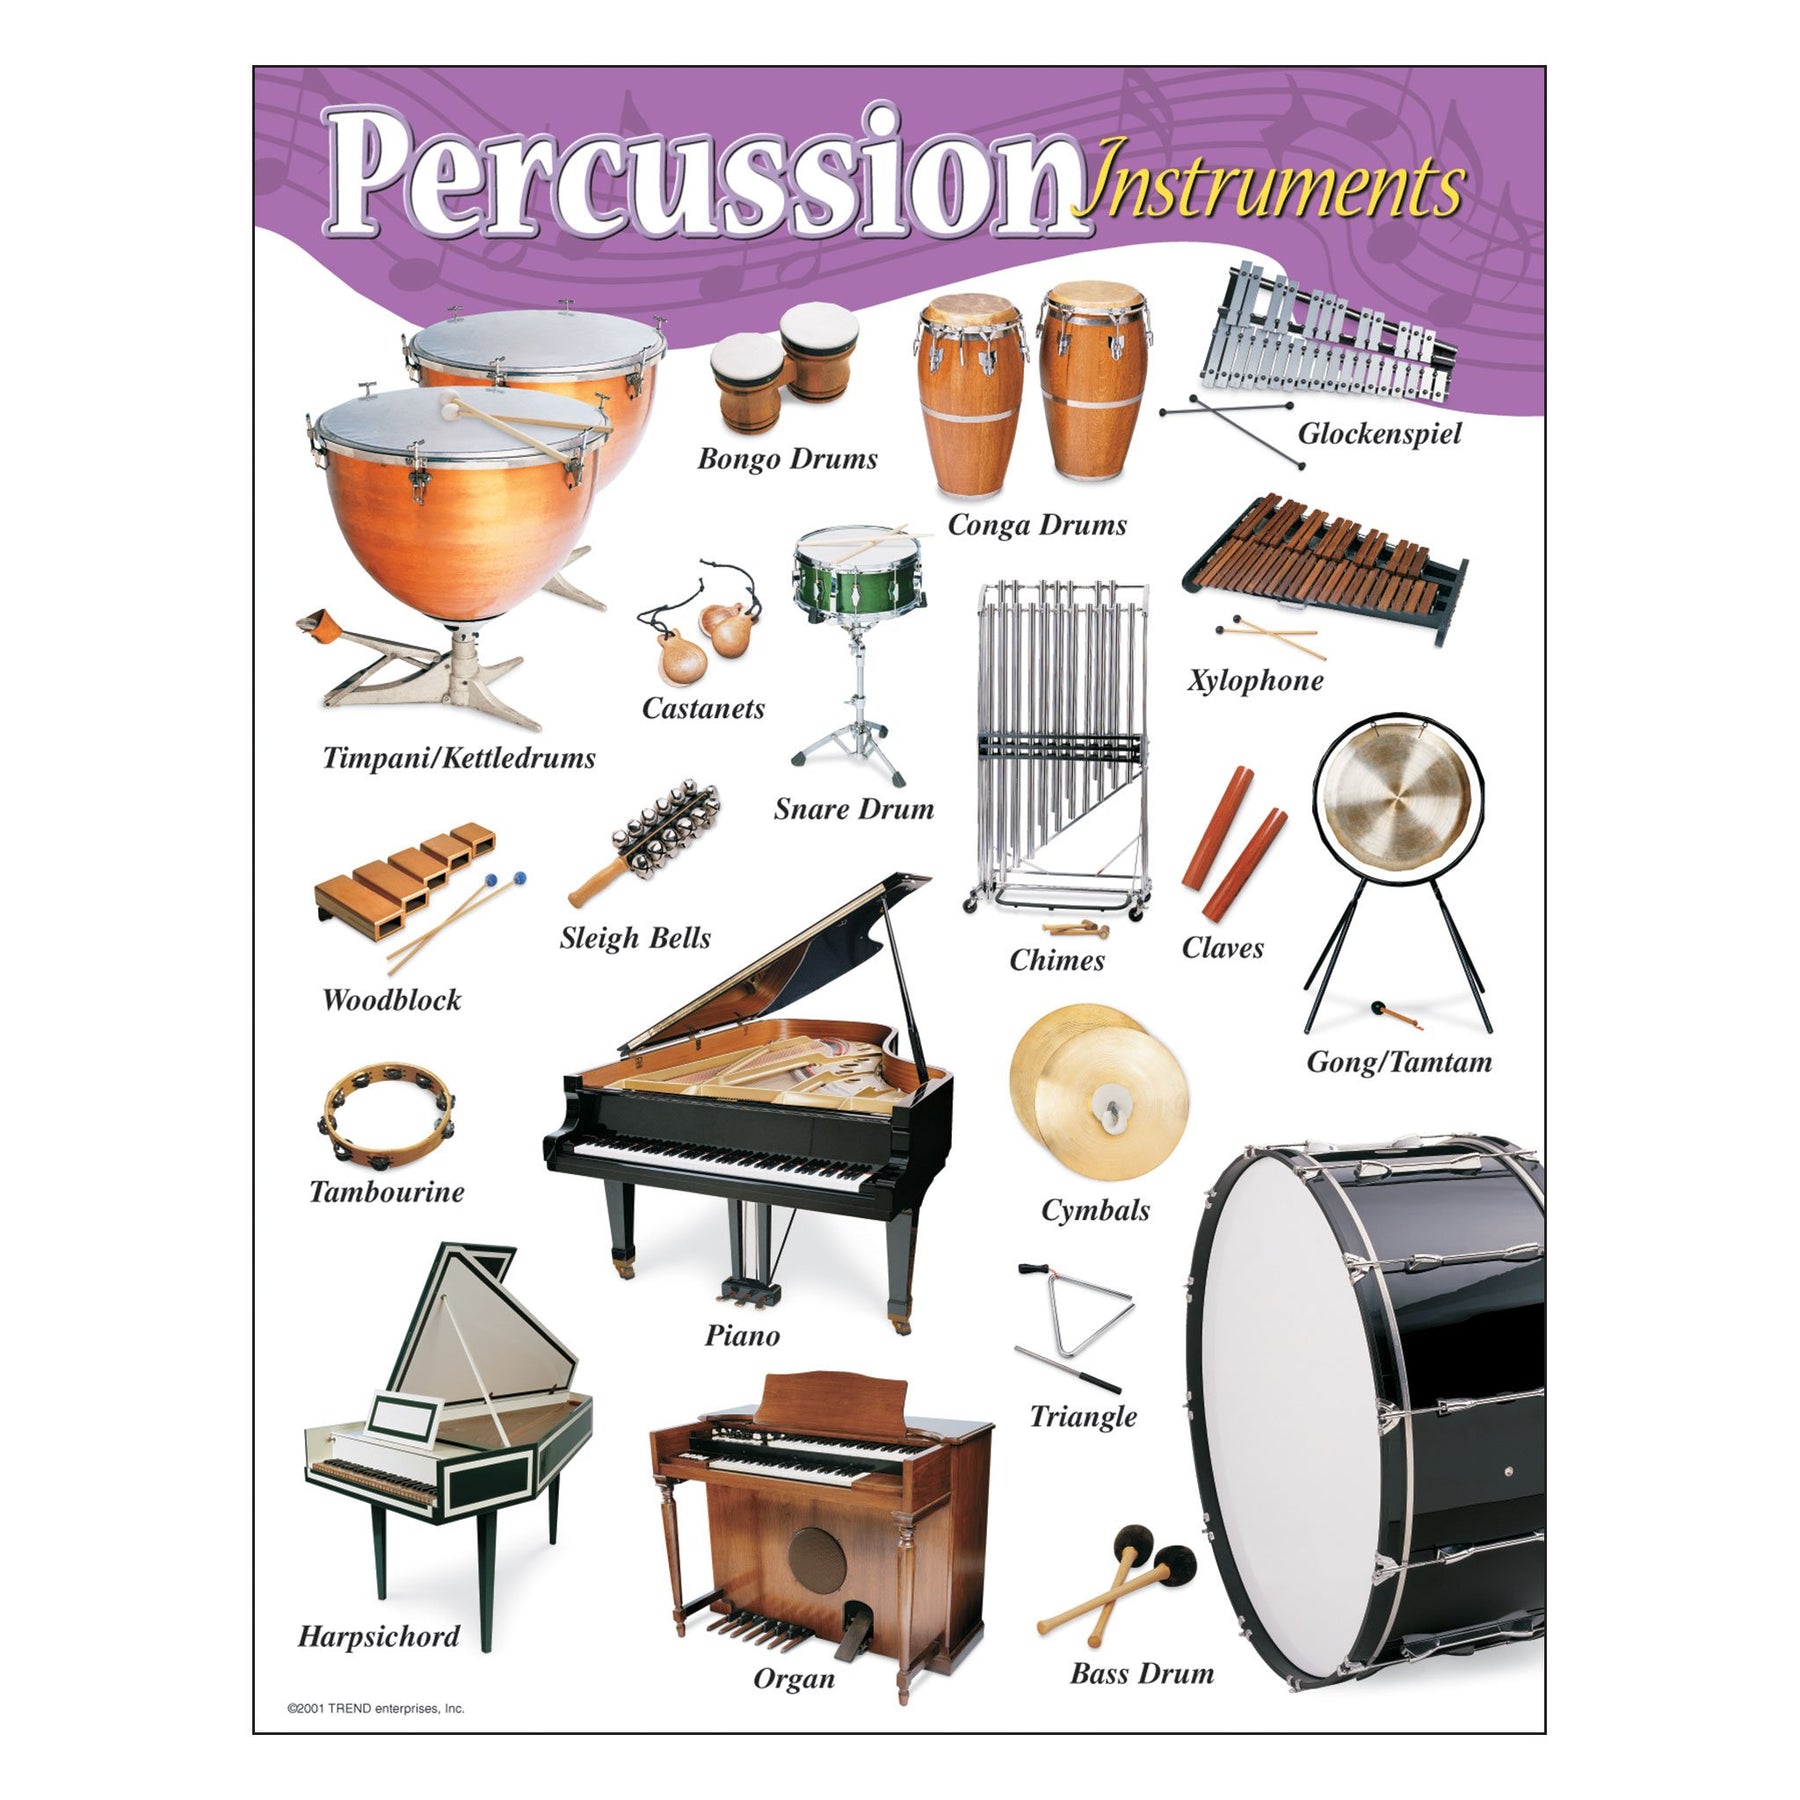 Percussions